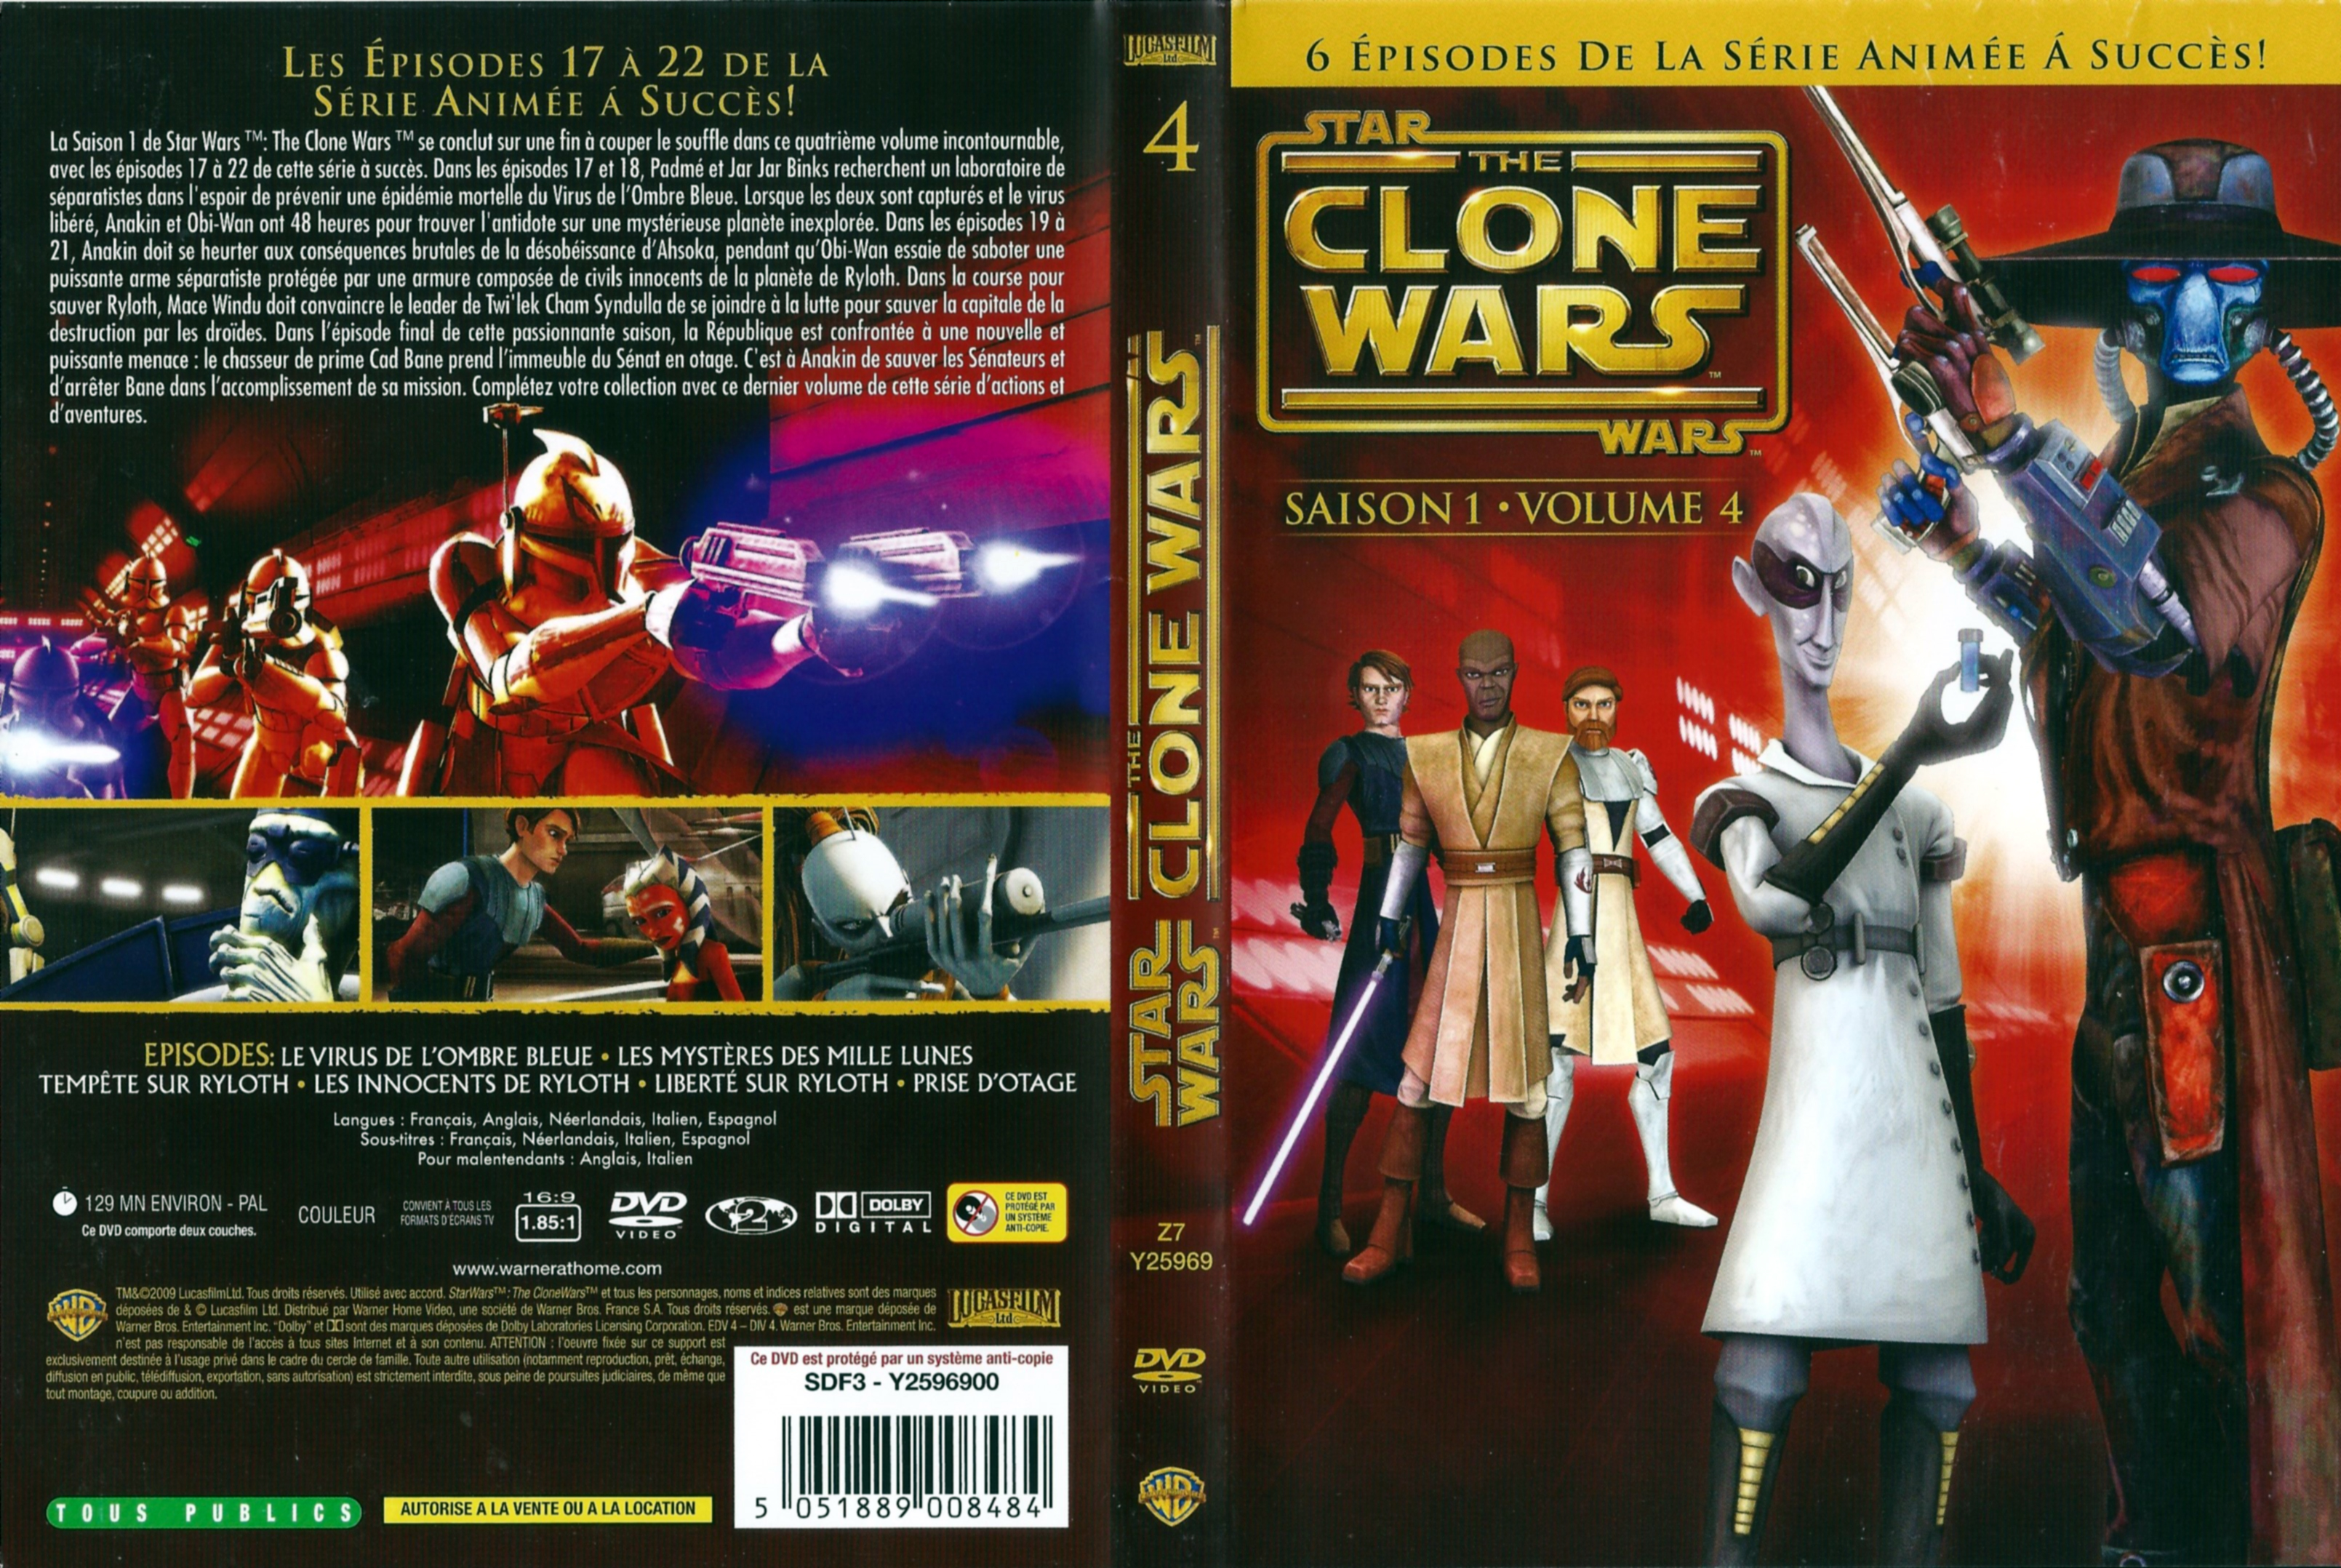 Jaquette DVD Star Wars The Clone Wars Saison 1 vol 04